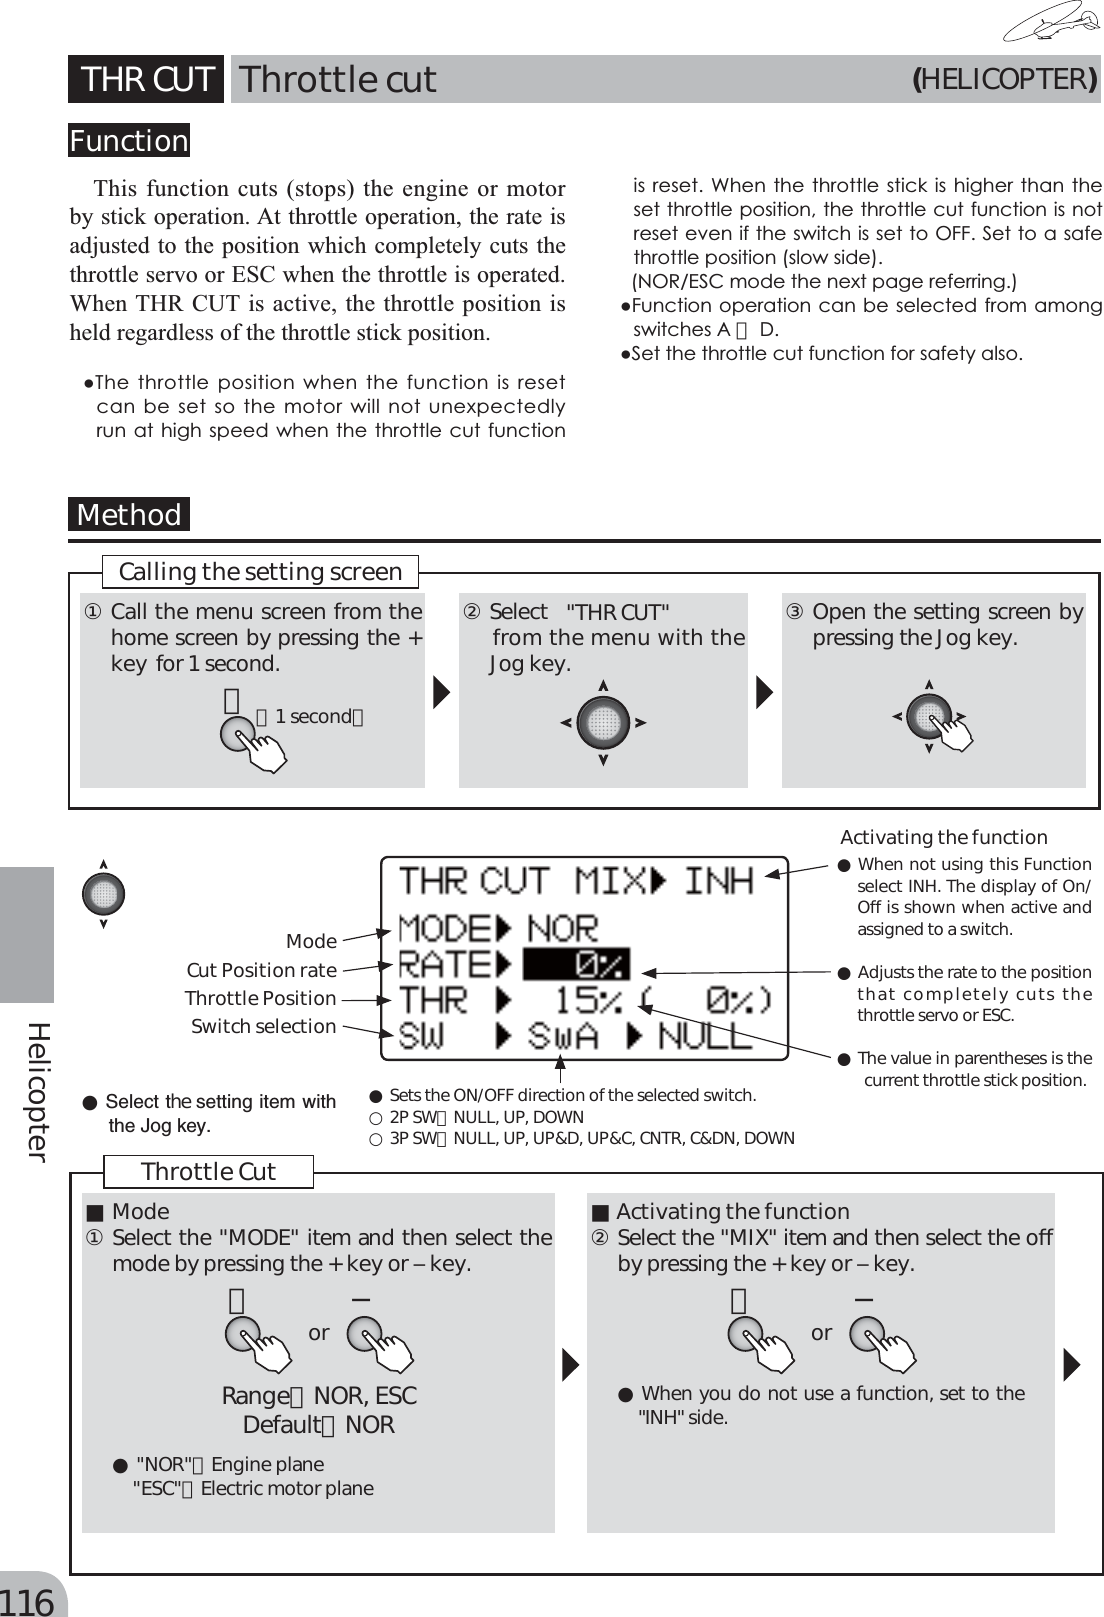 Page 36 of Futaba T6K-24G Radio Control User Manual MANUAL 6K E  0521